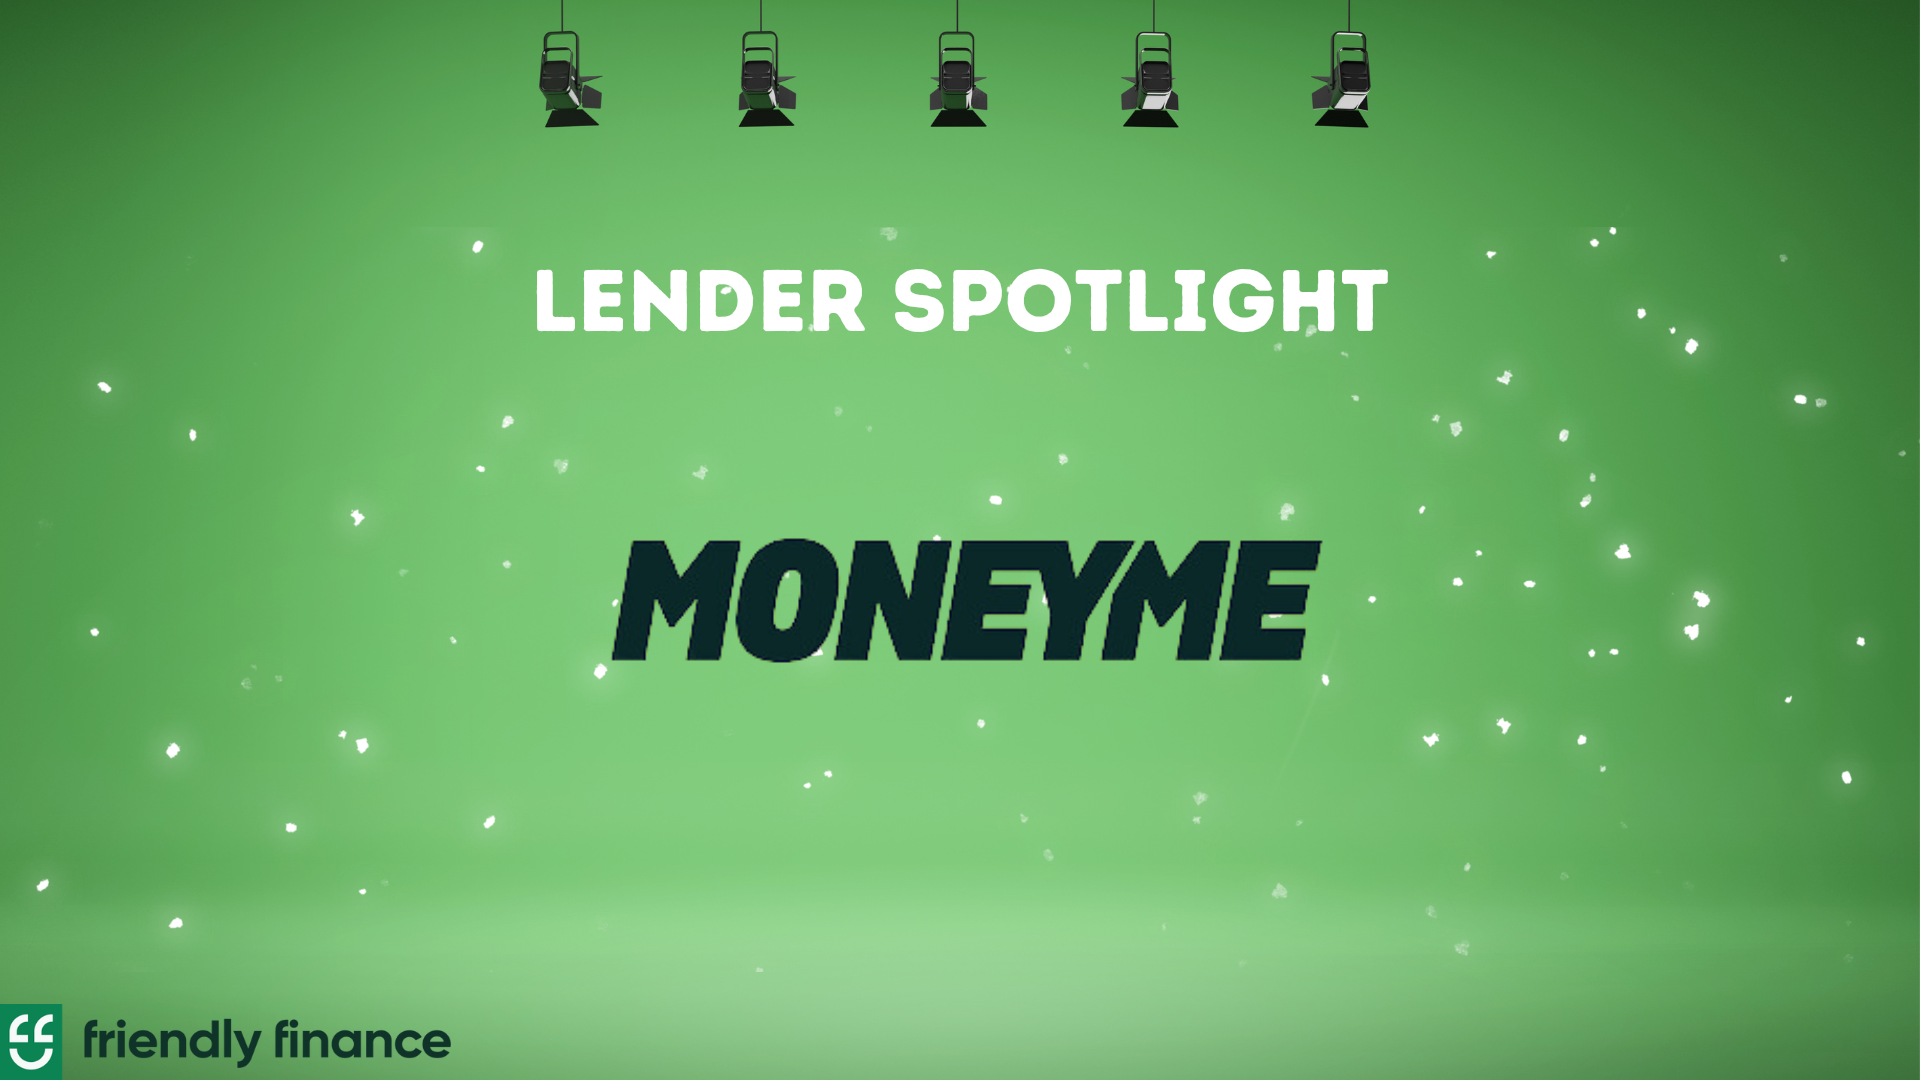 spotlights pointing to MoneyMe's logo